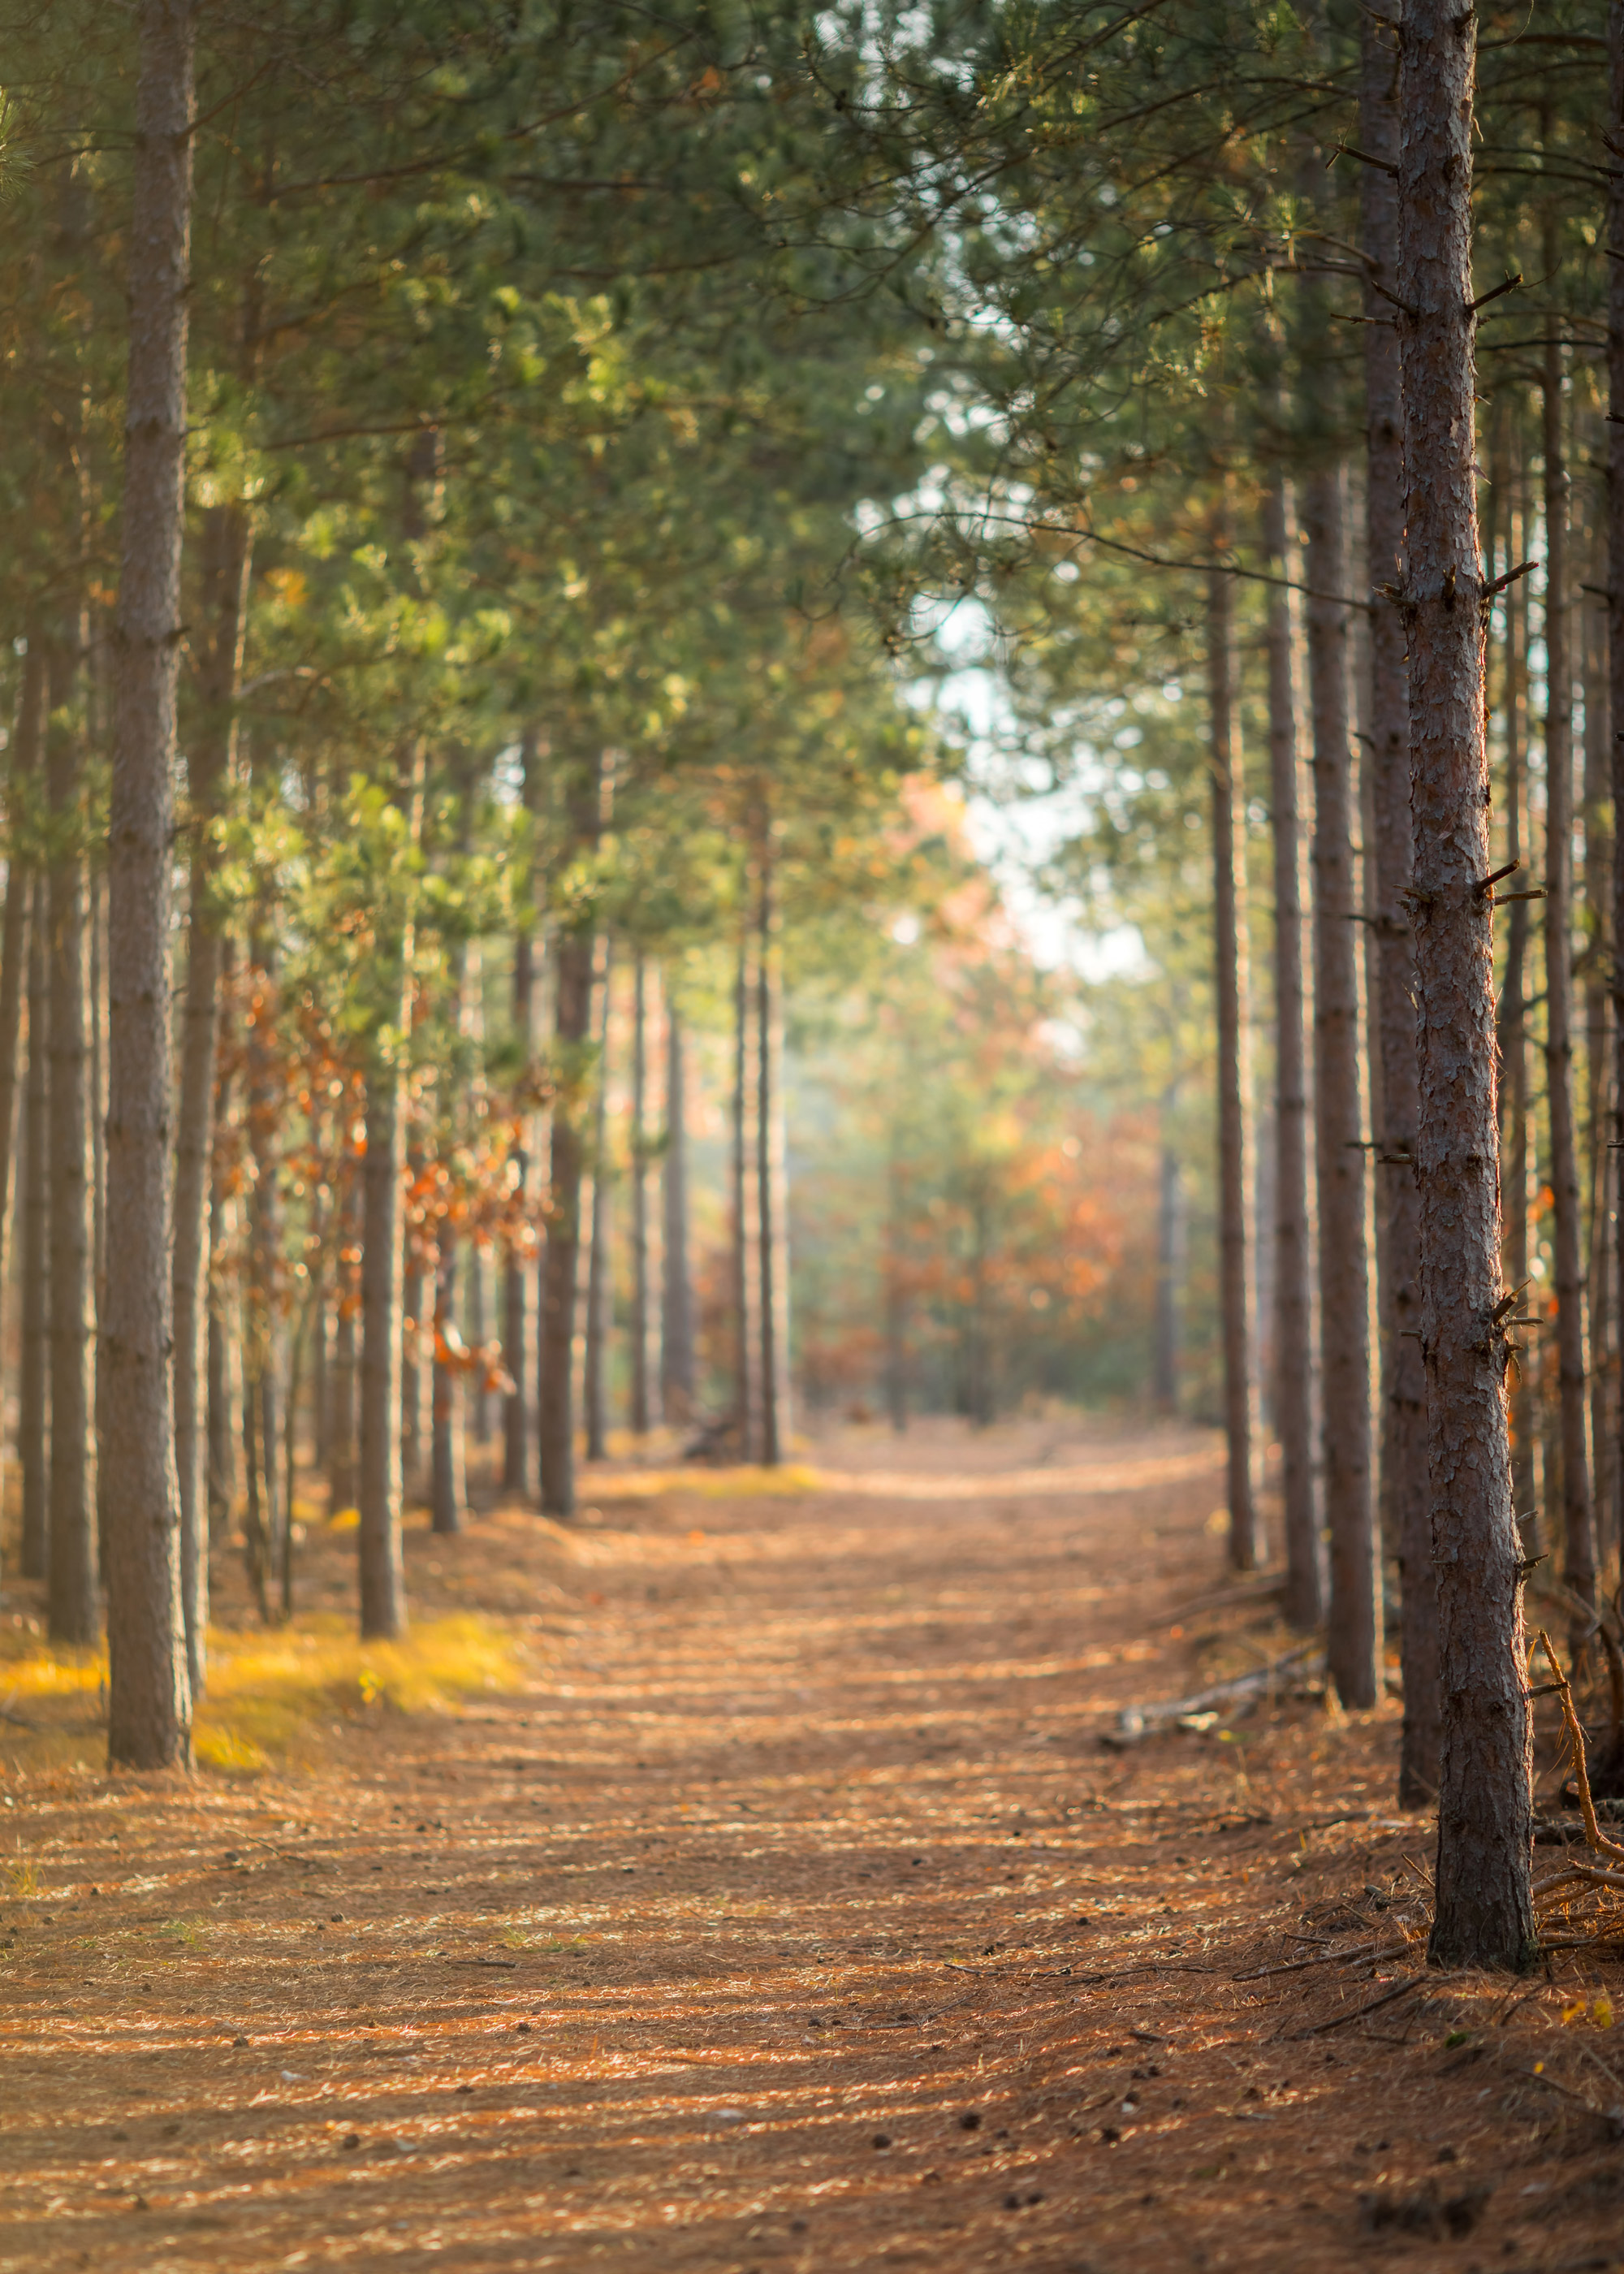 A path through the trees in autumn.